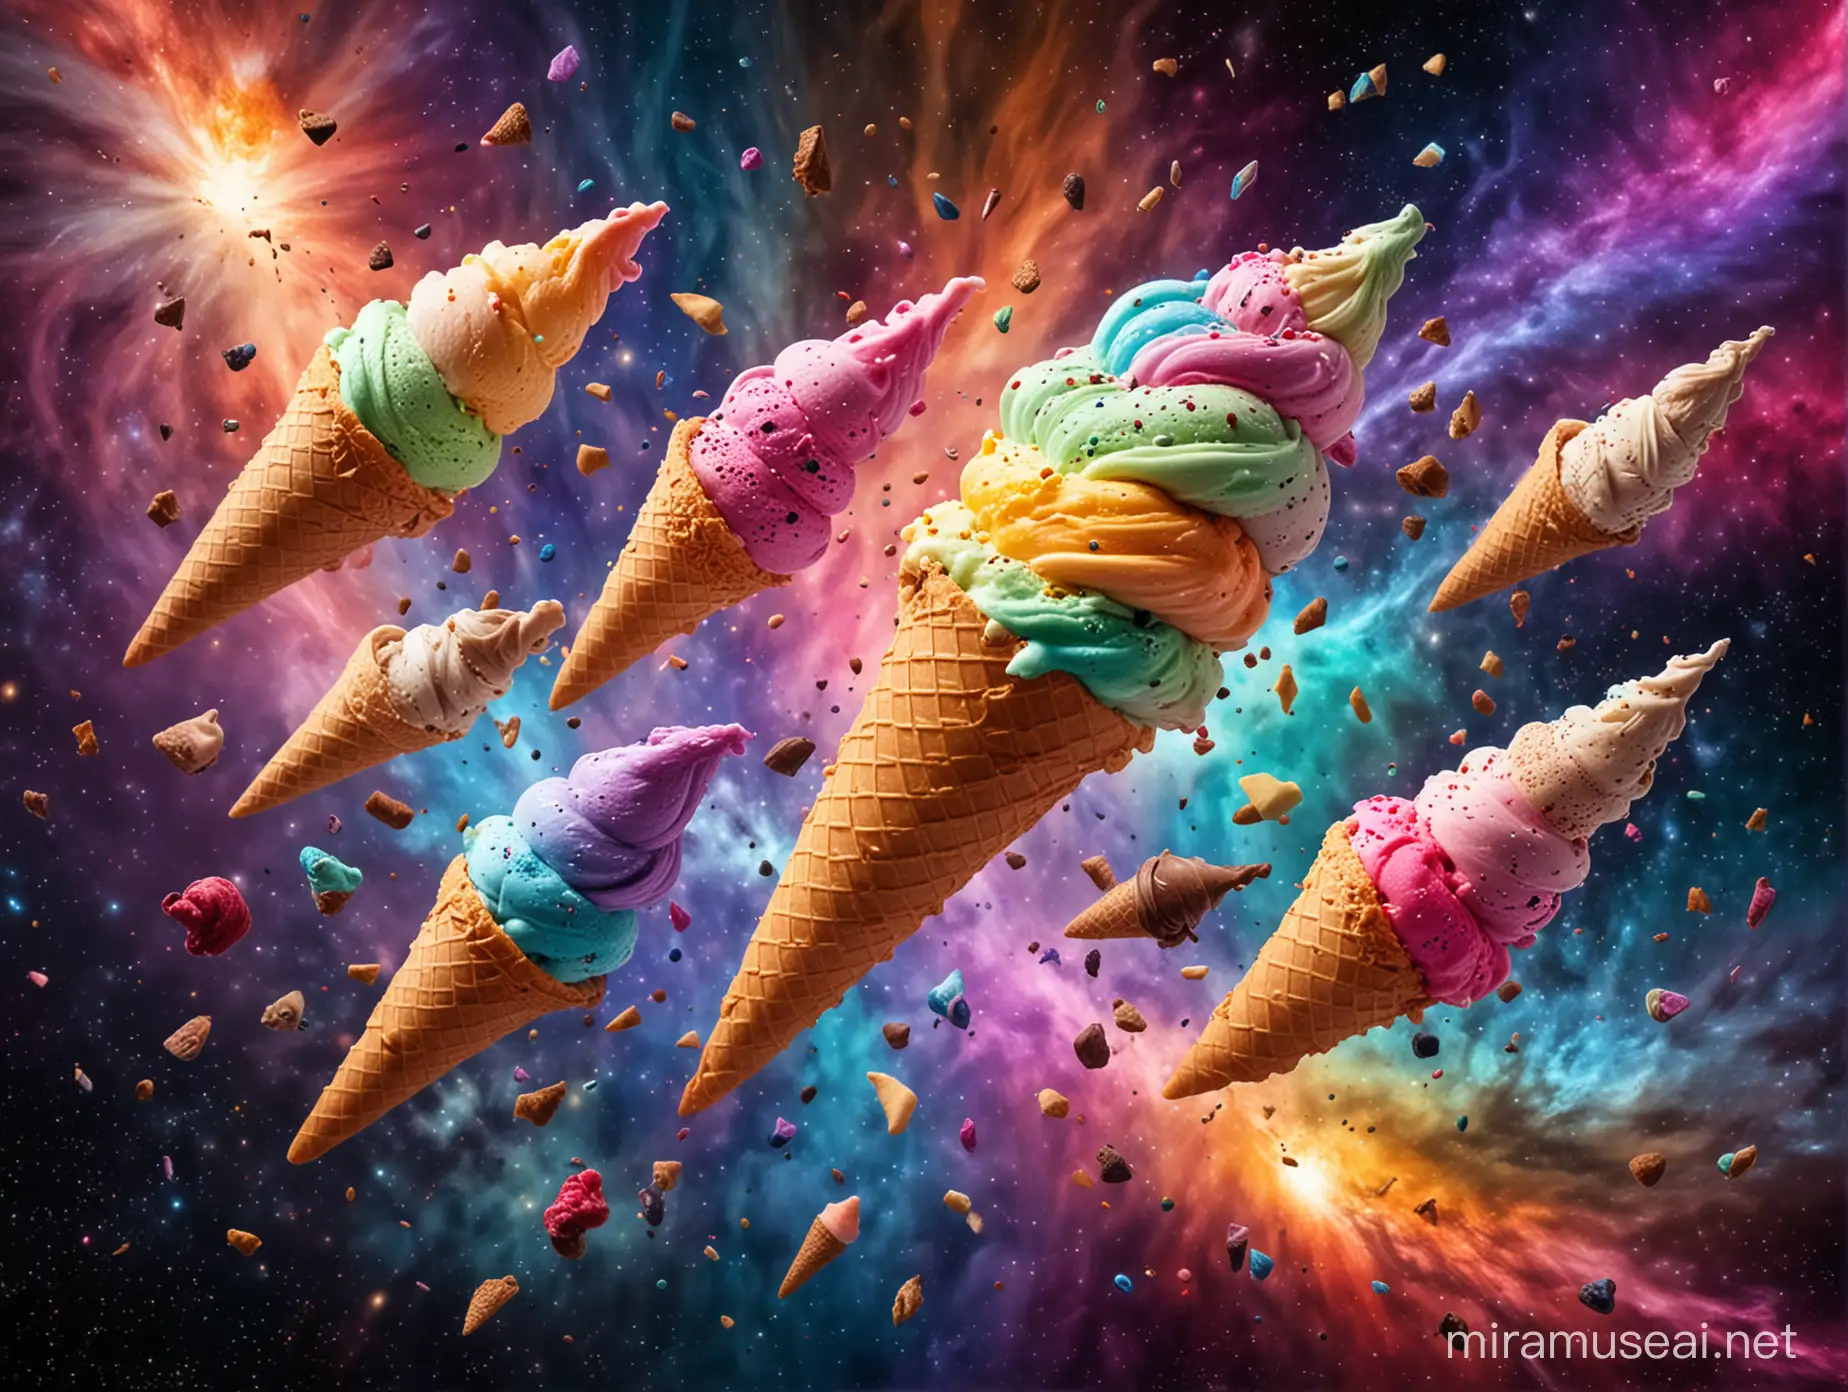 Vibrant Ice Cream Cones Soaring in Cosmic Bliss